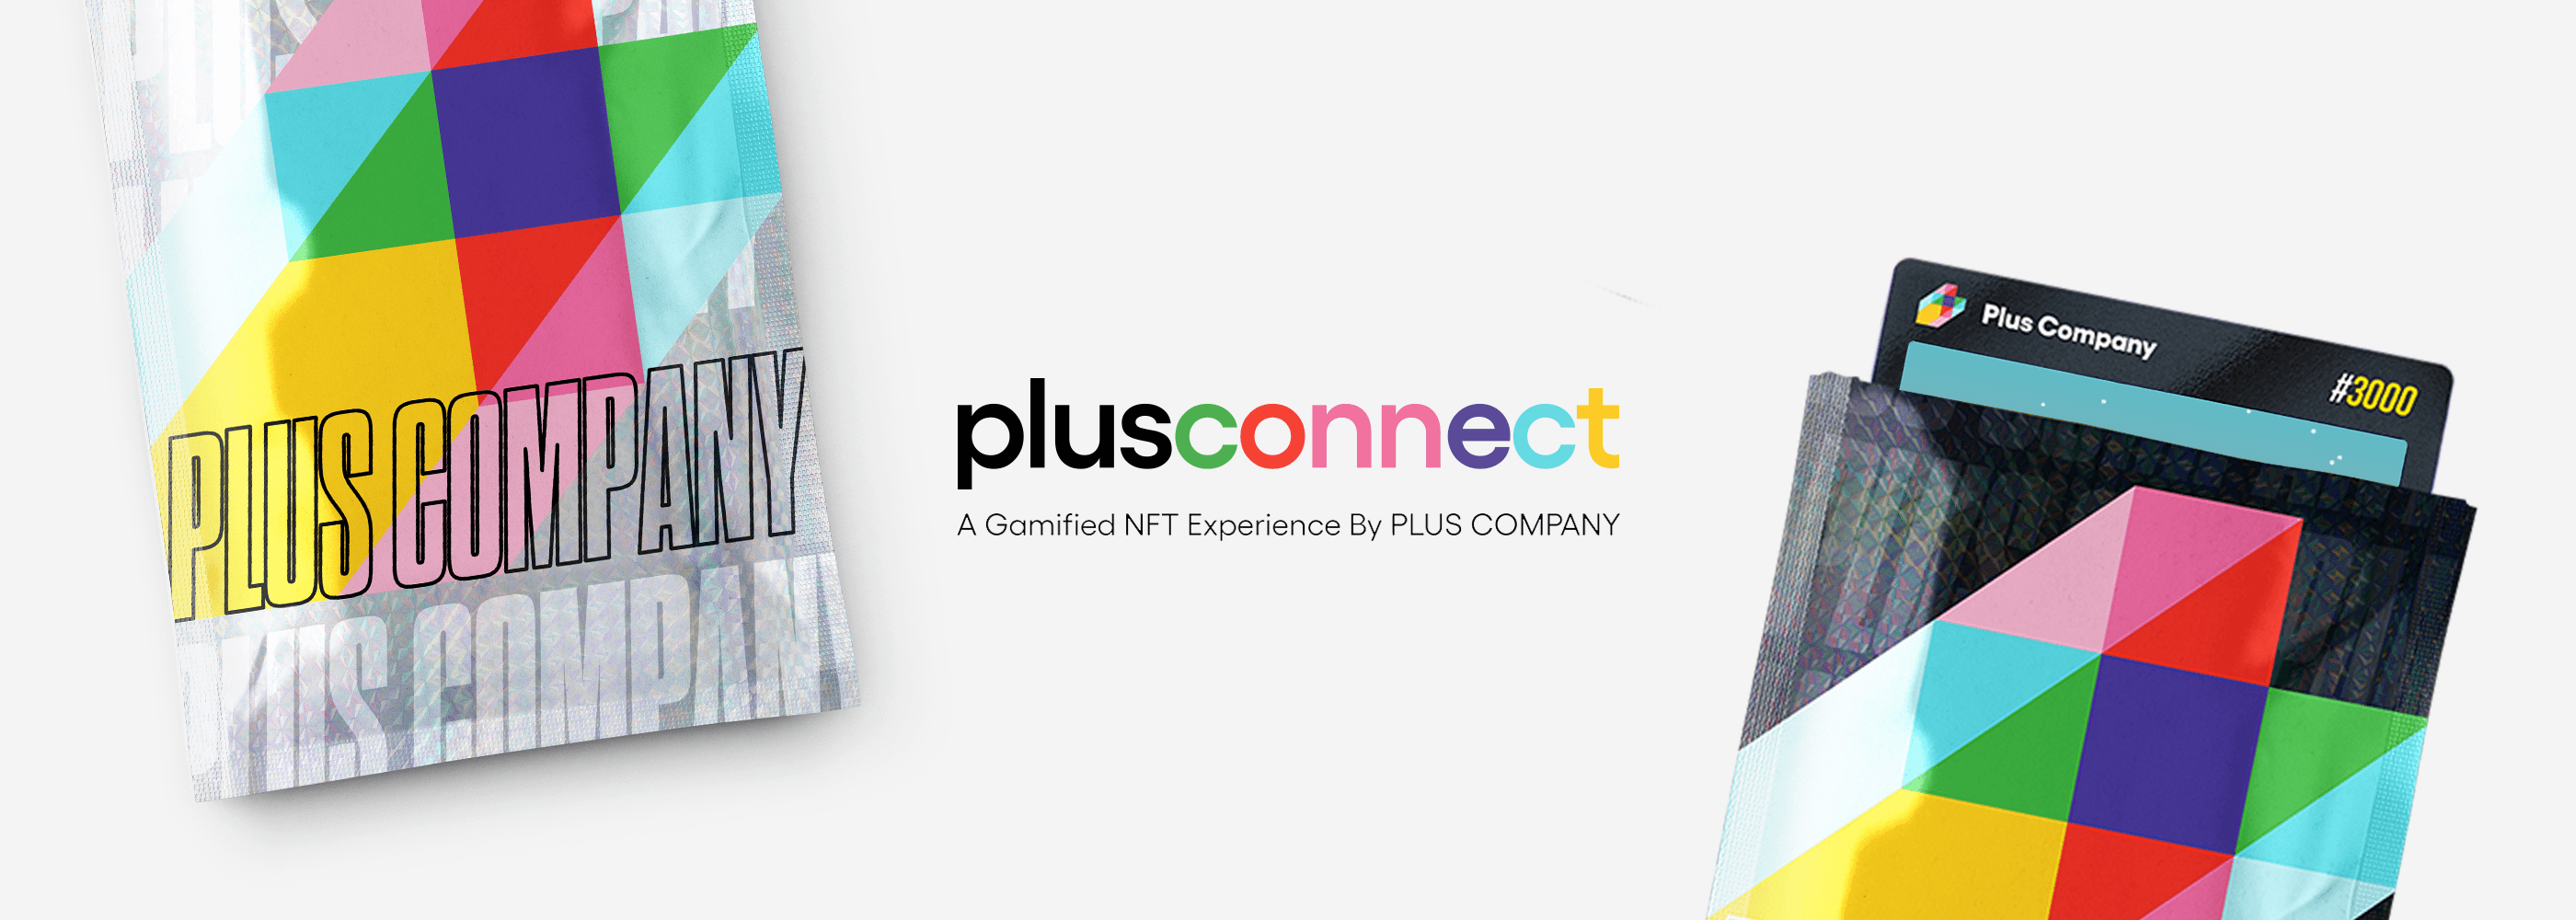 plusconnect